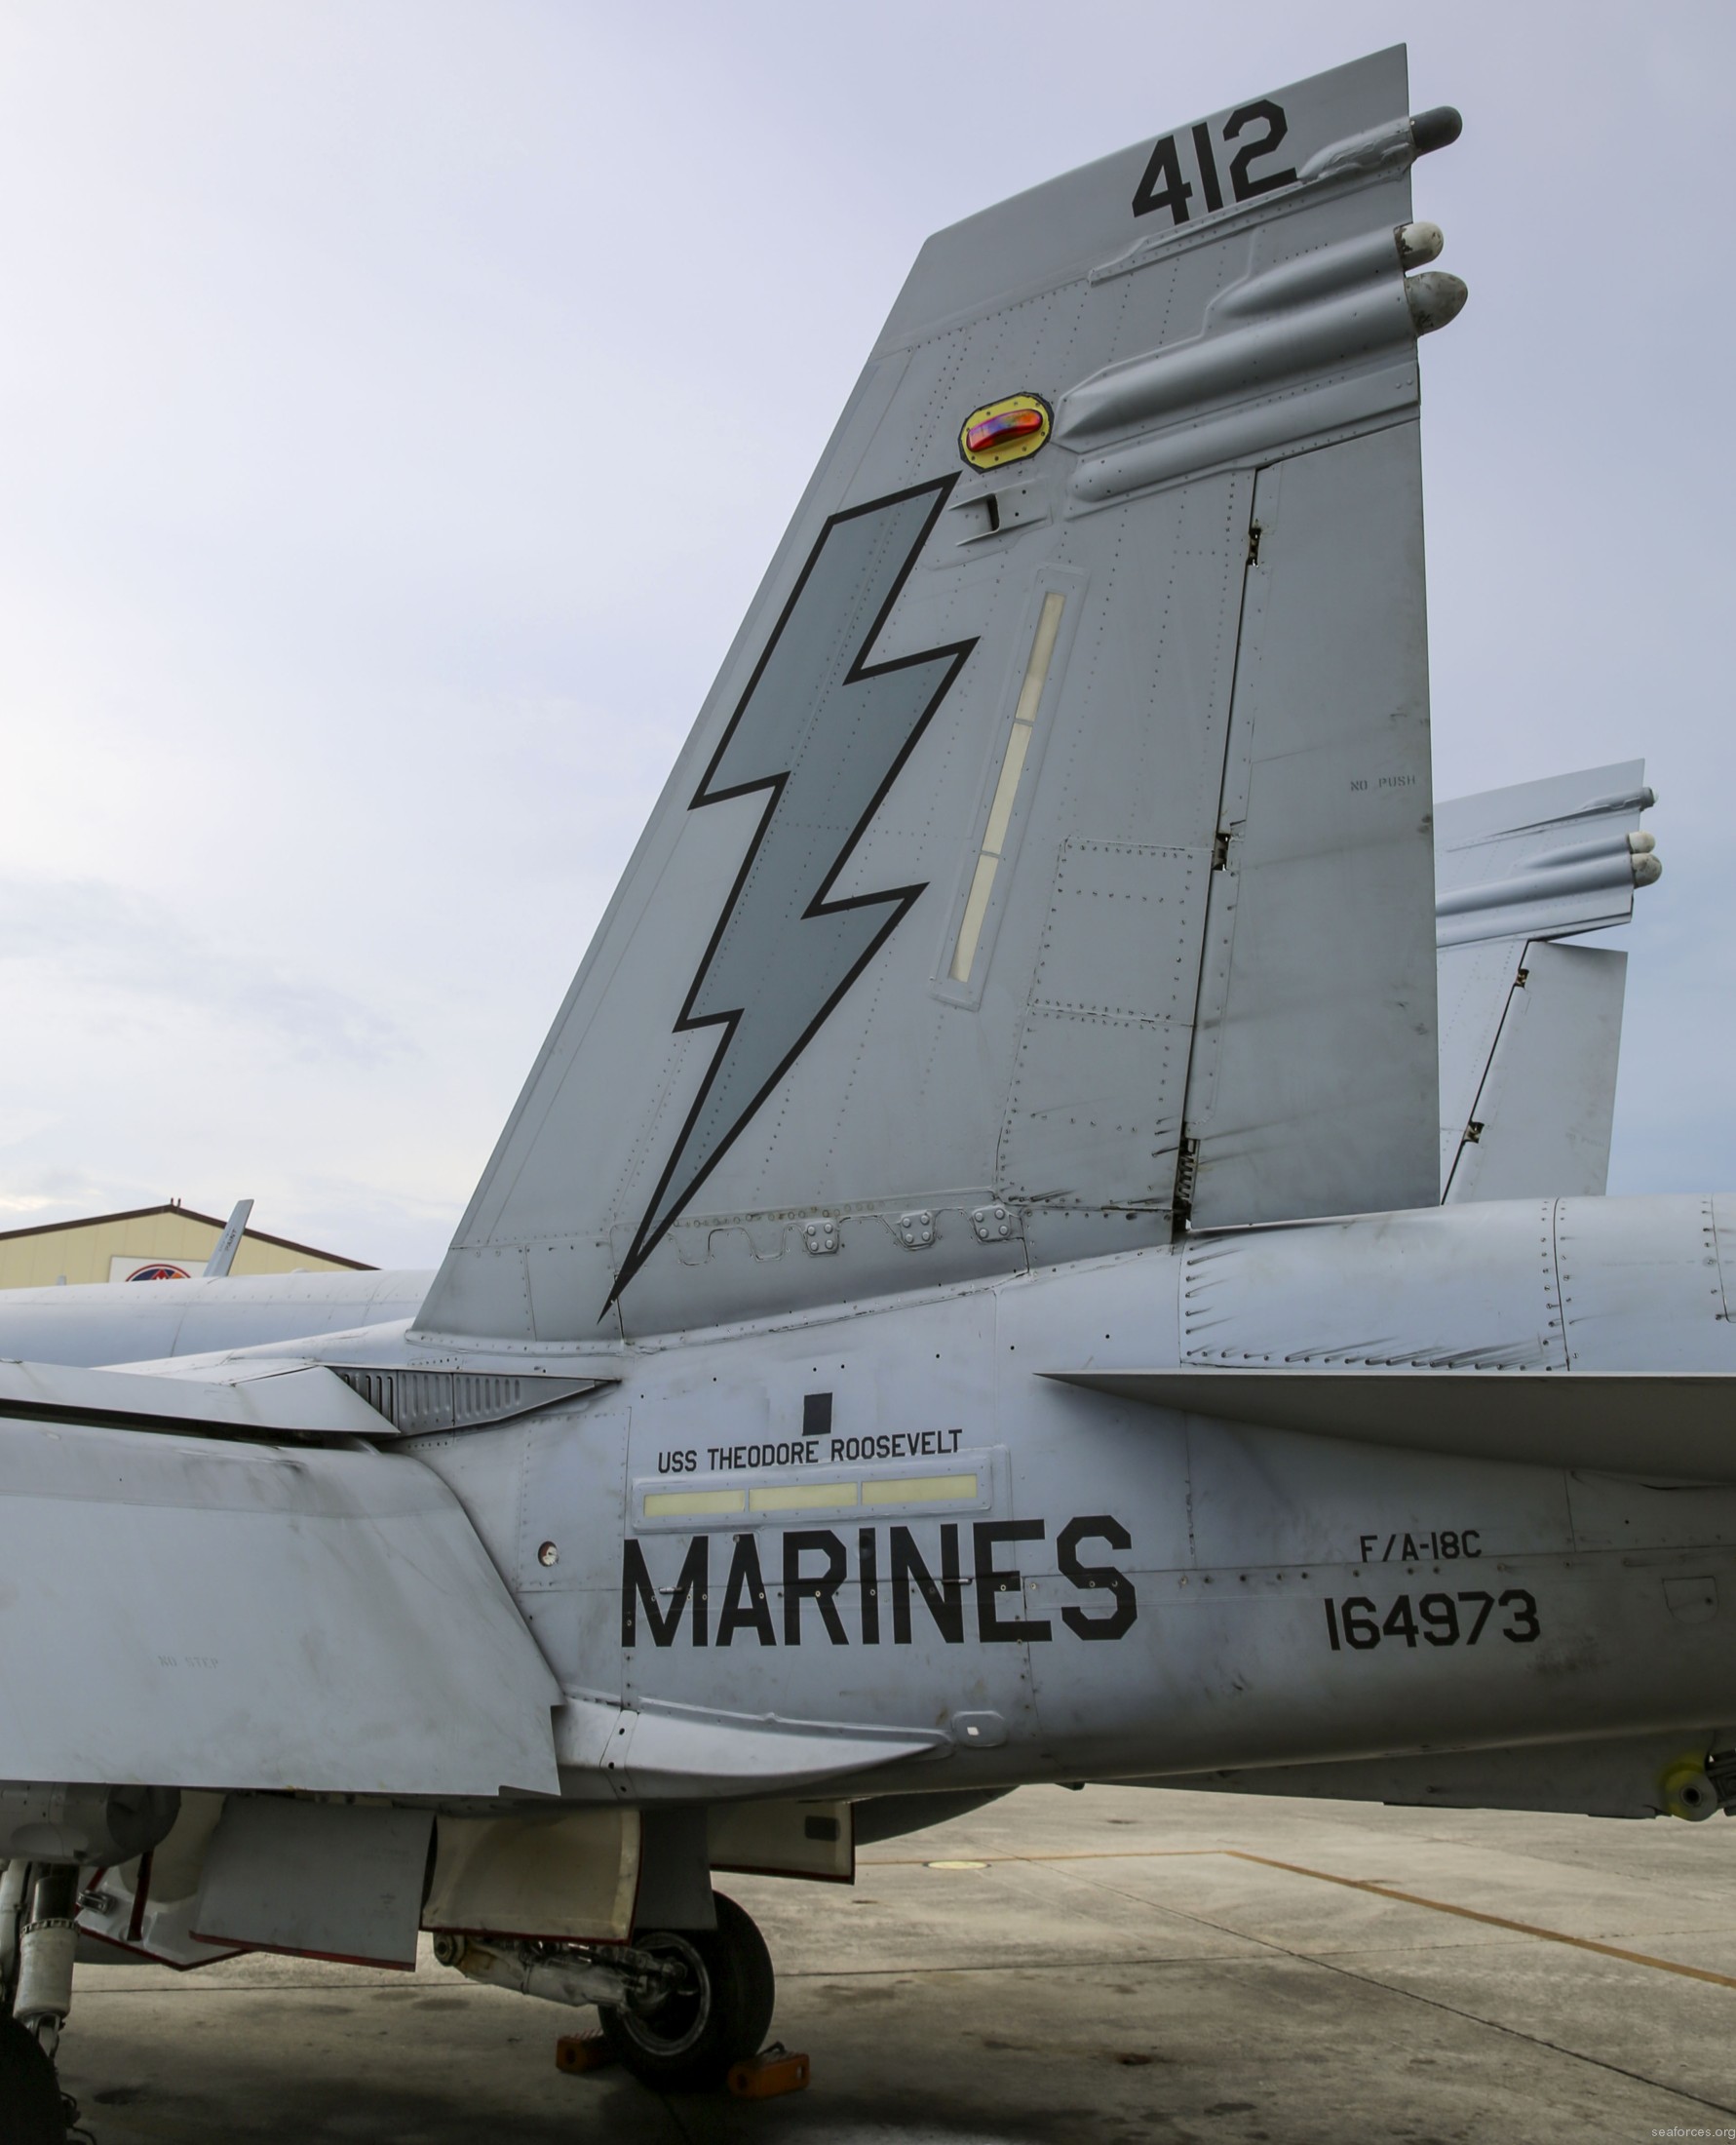 vmfa-251 thunderbolts marine fighter attack squadron f/a-18c hornet 134